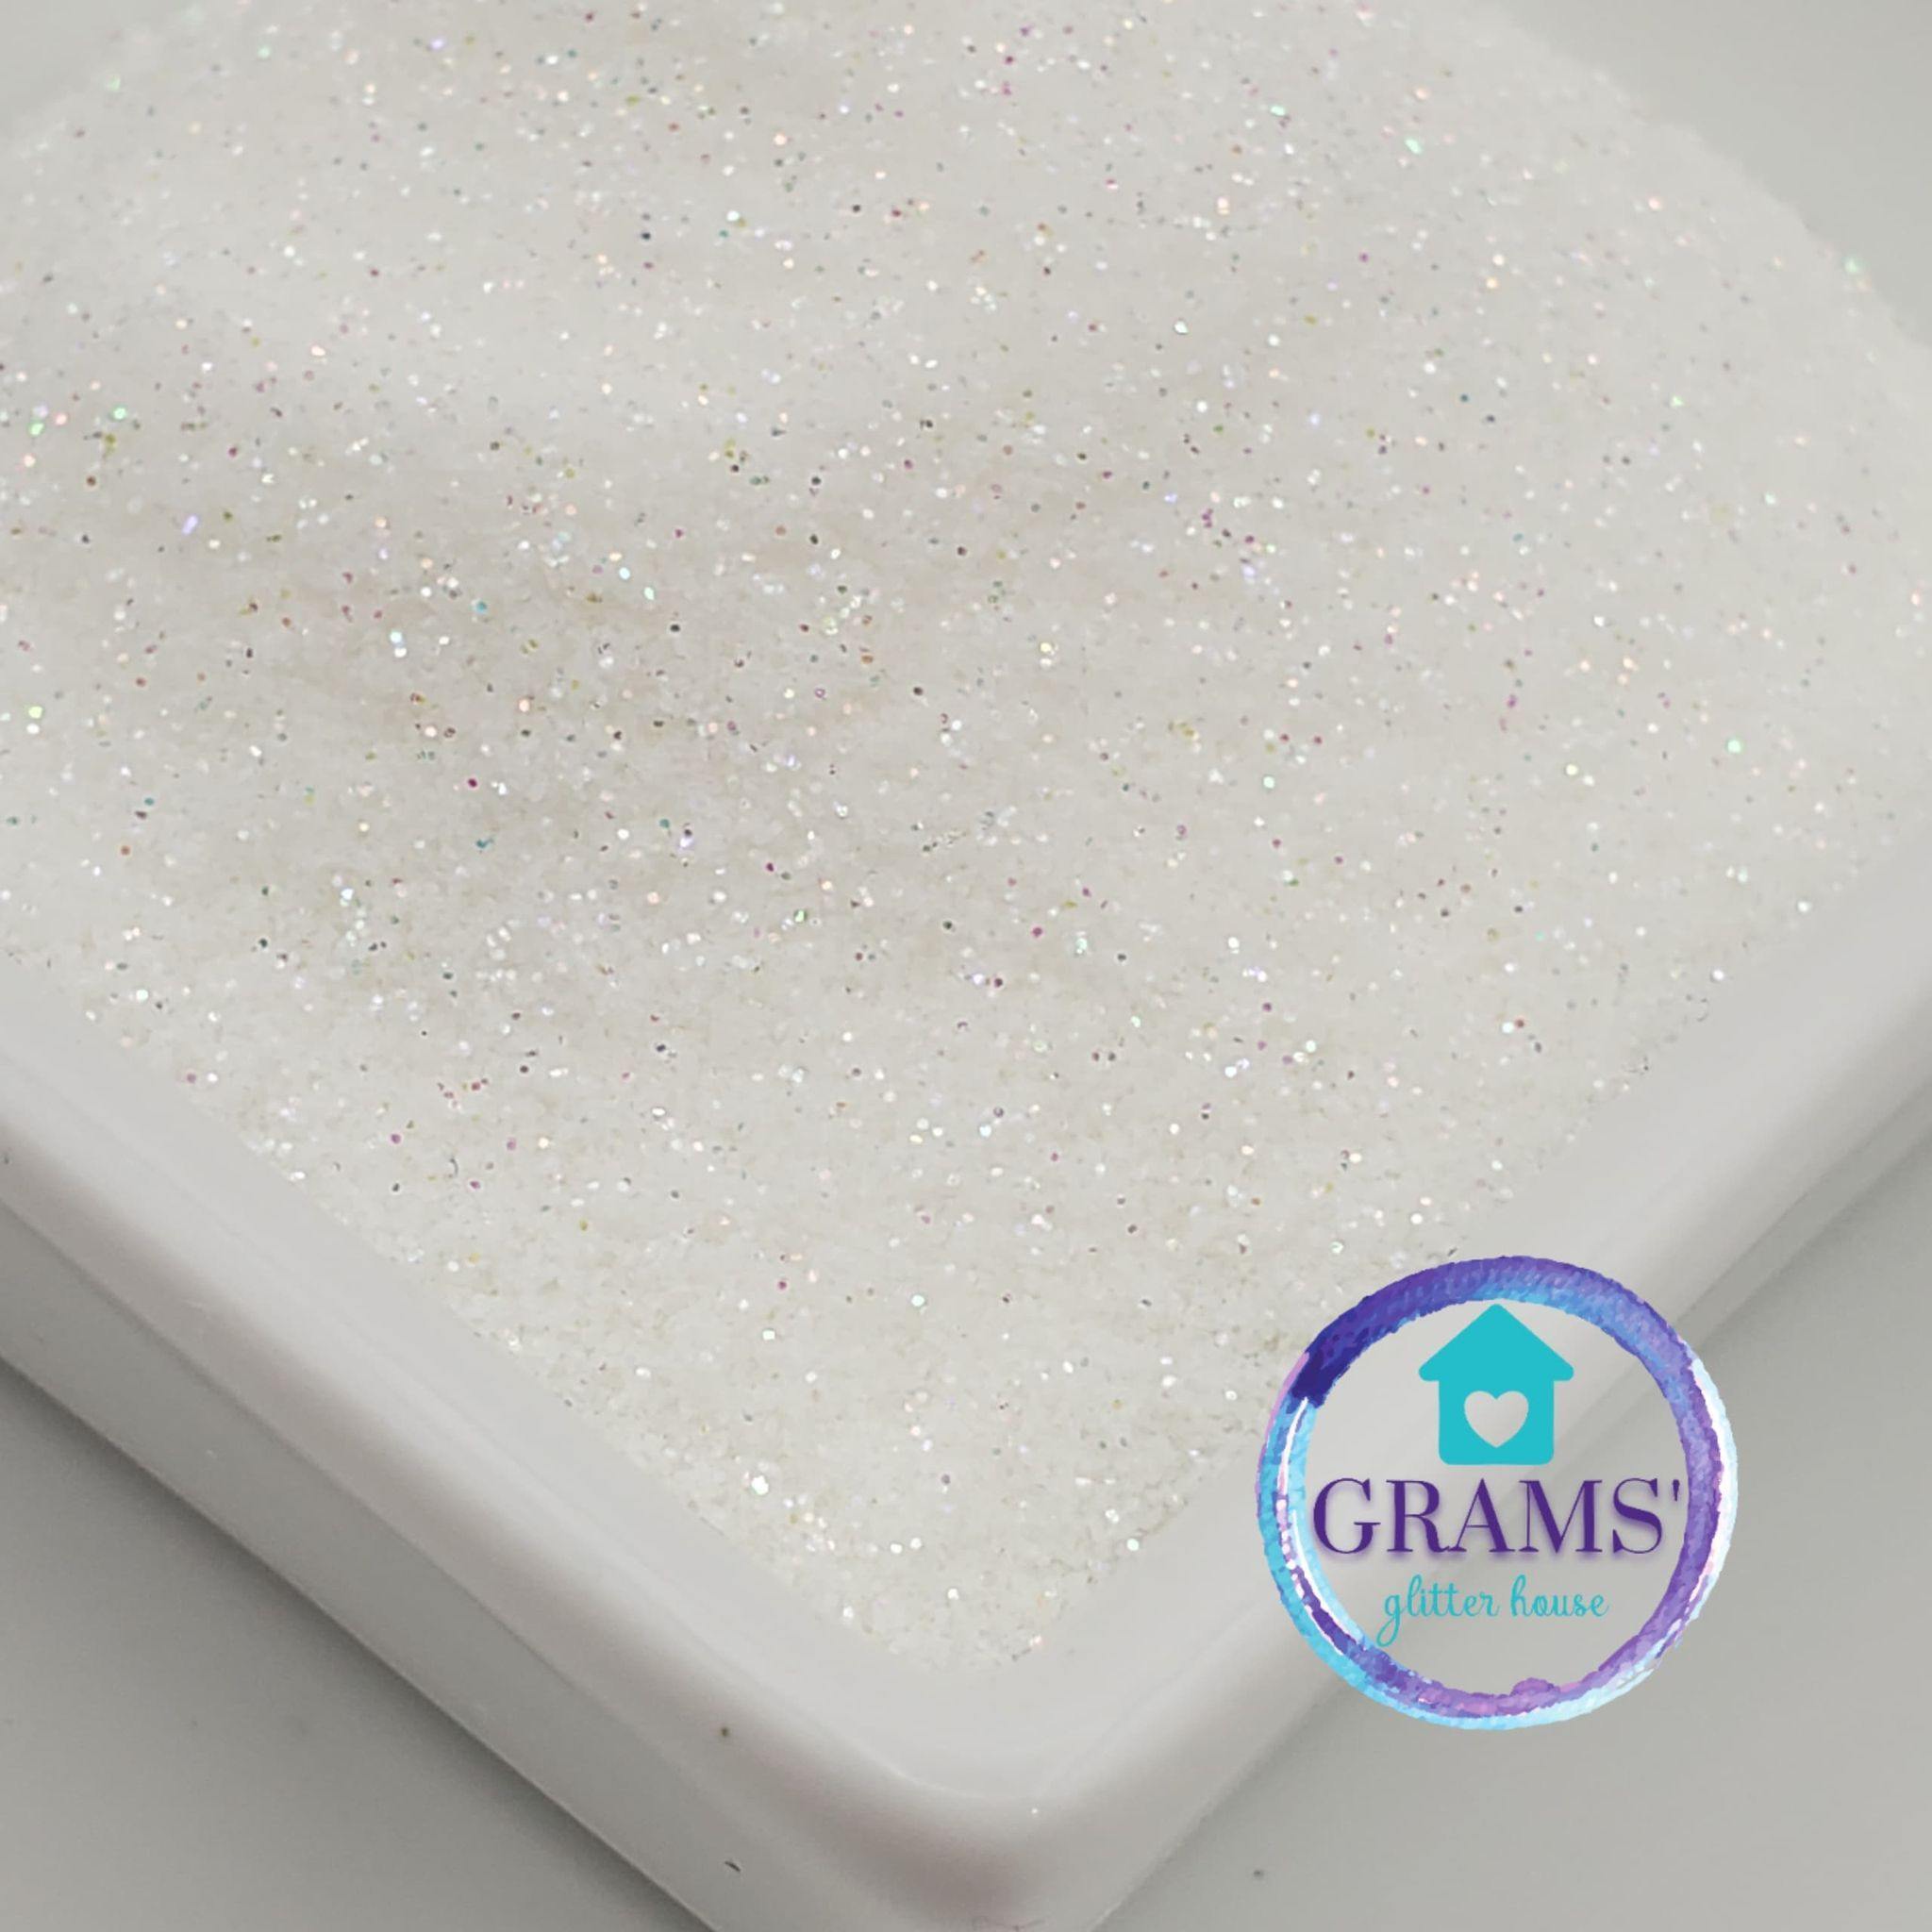 Grams' Glitter House Snow Fall polyester glitter